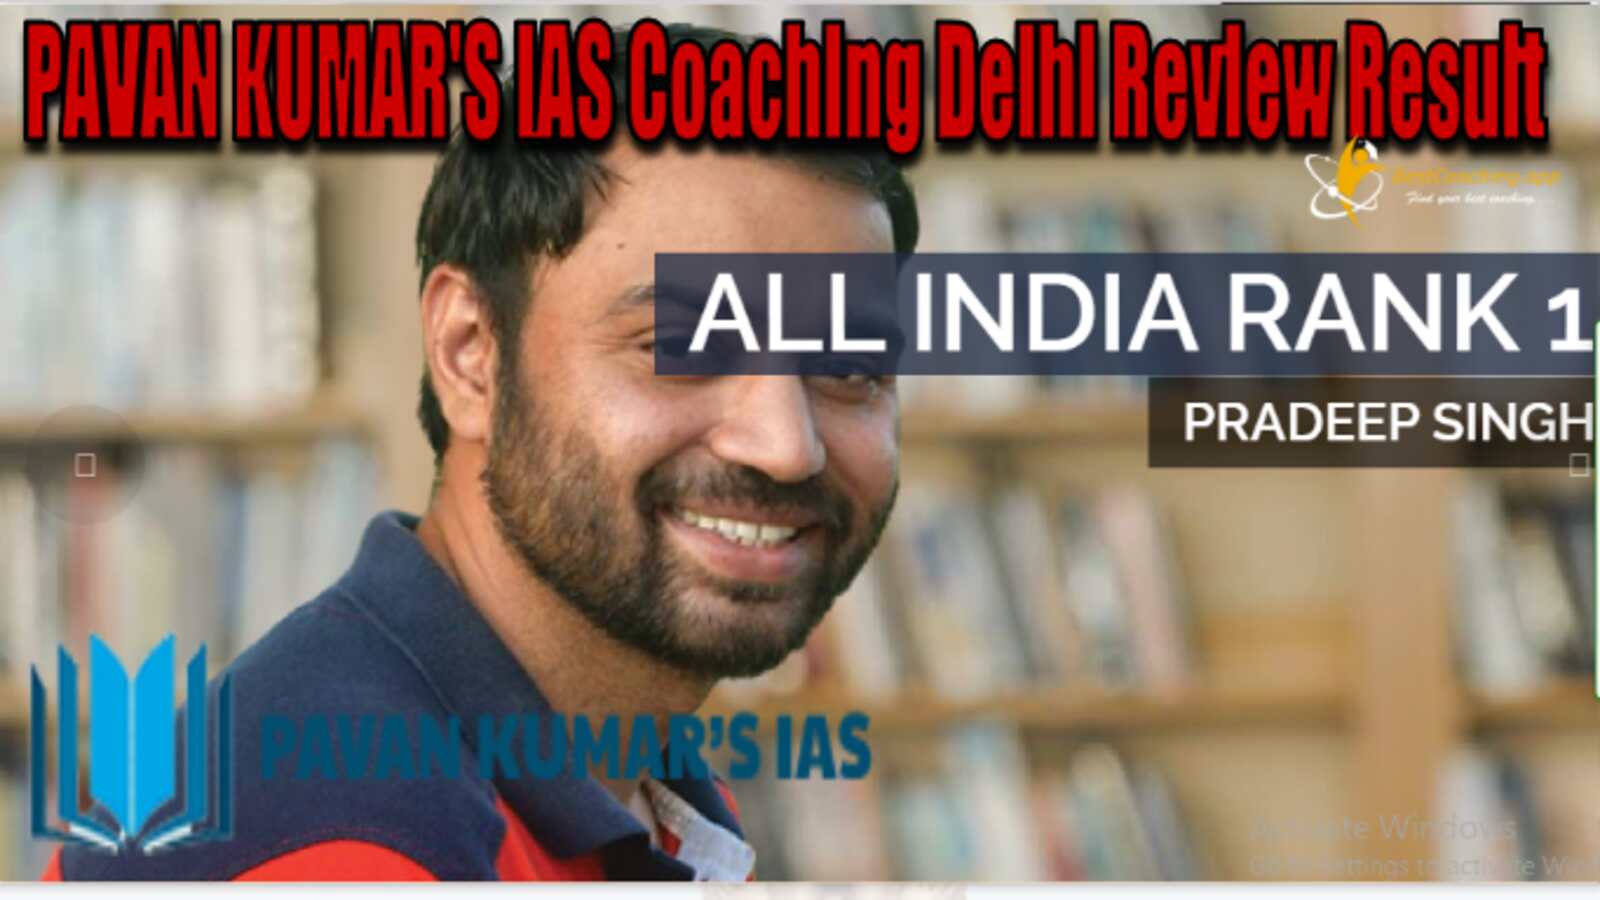 PAVAN KUMAR'S IAS Coaching Delhi Review Result